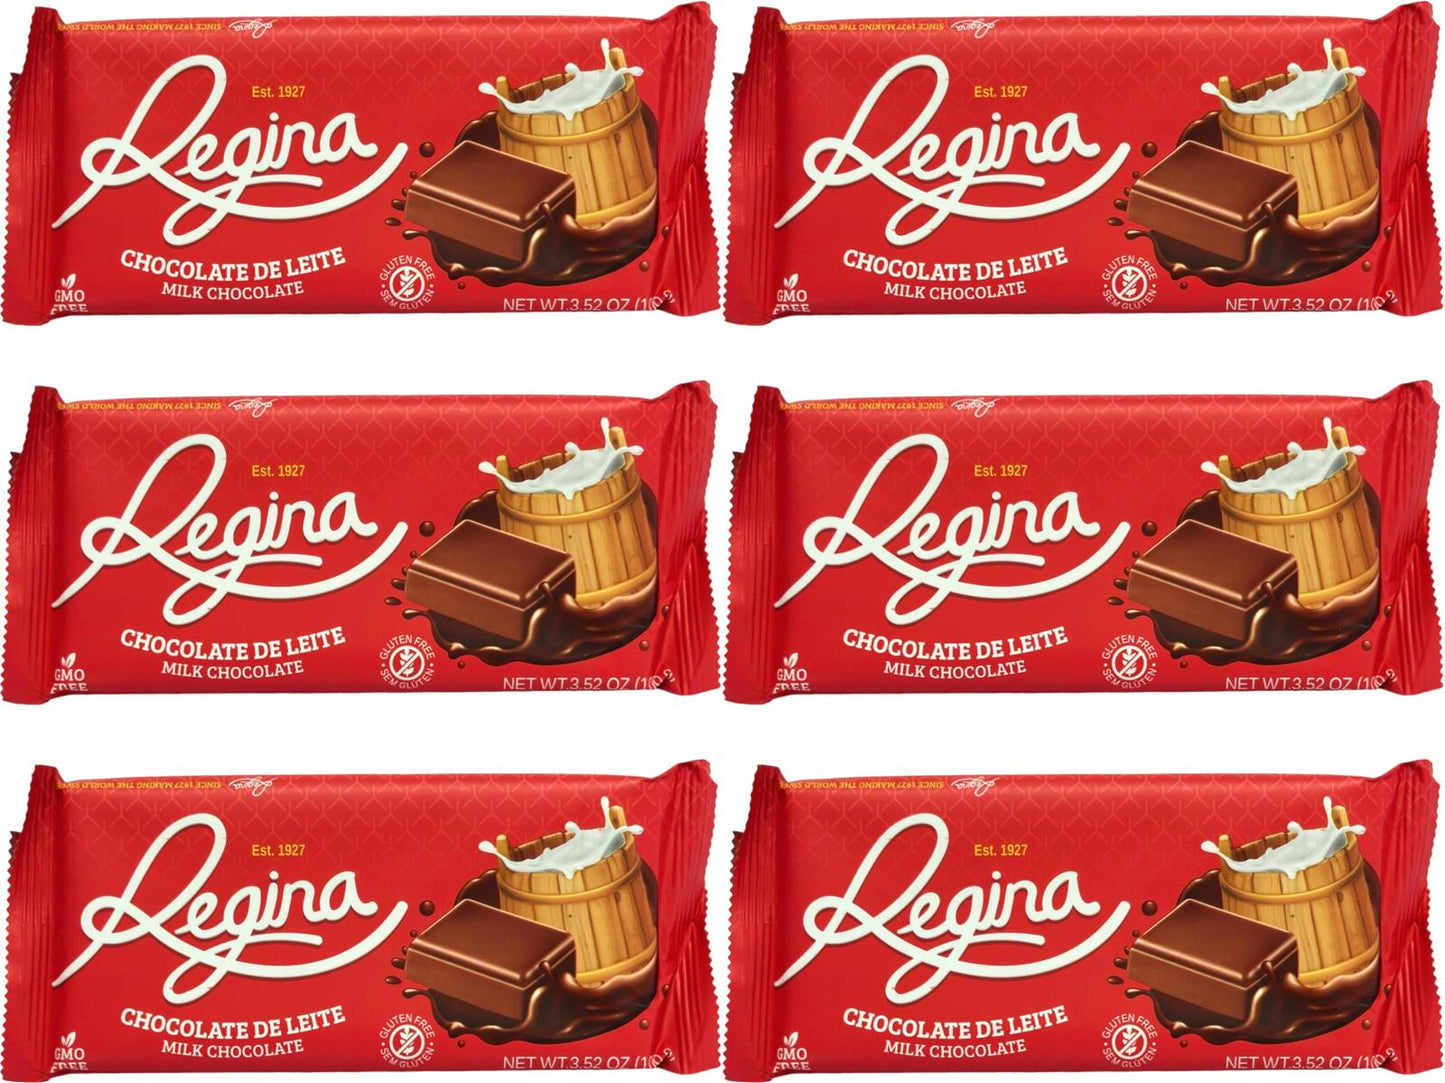 Regina Chocolate de Leite Portuguese Milk Chocolate 100g - 6 pack 600g total